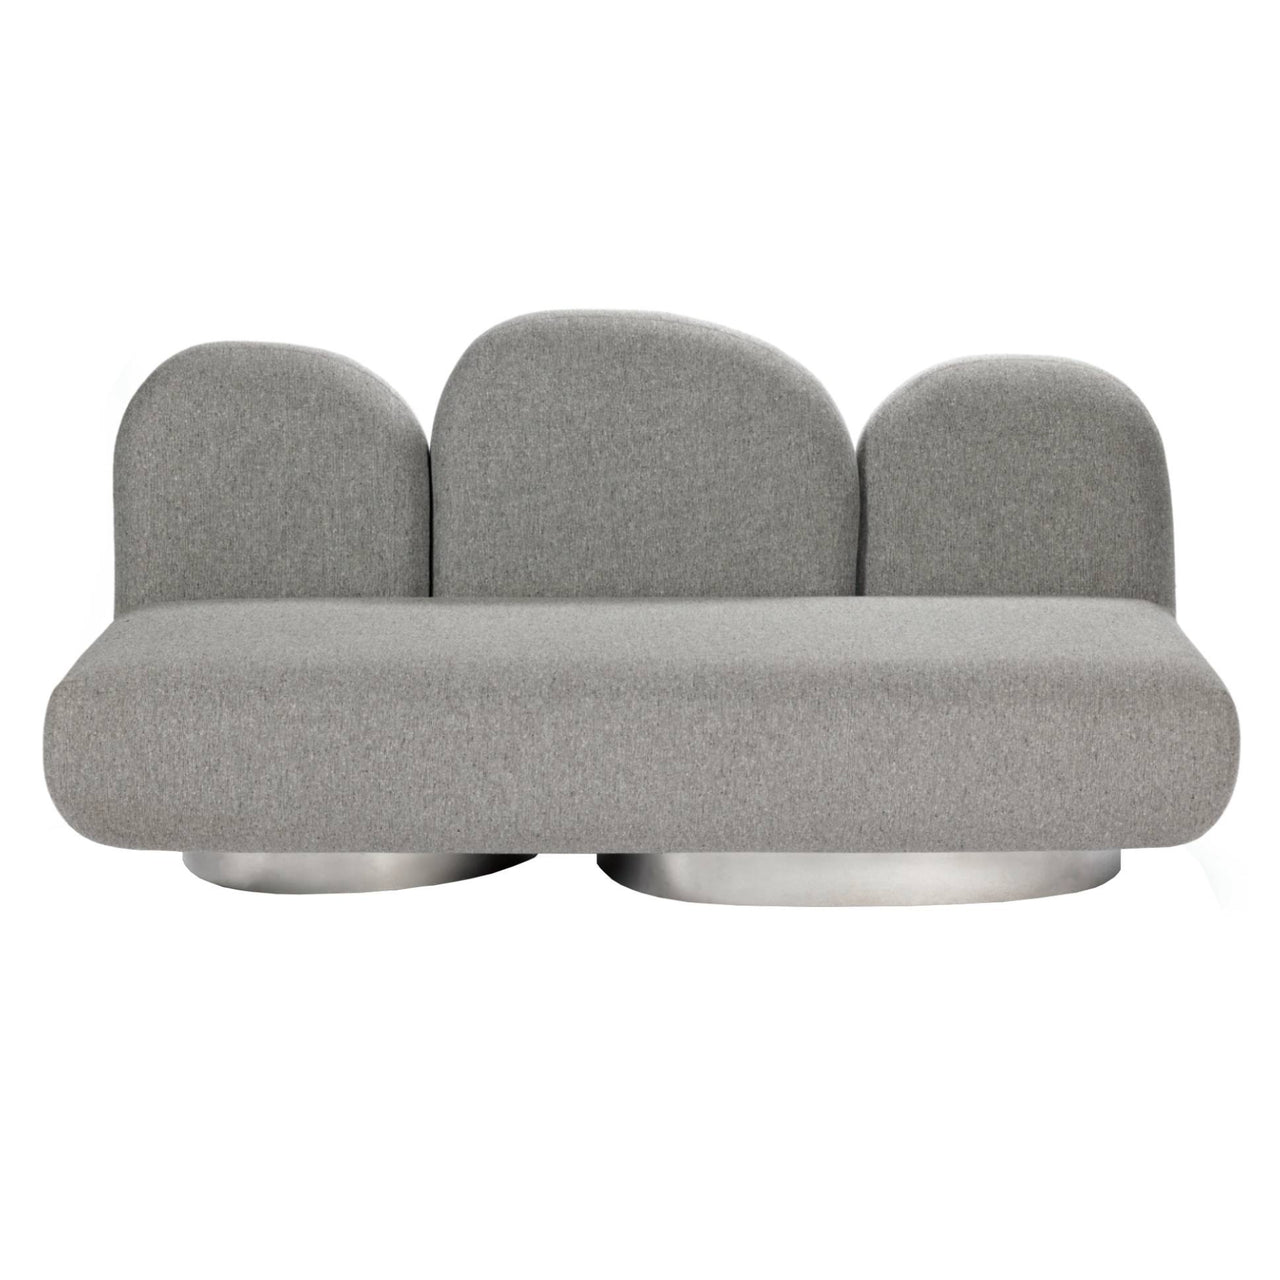 Assemble 2 Seat Sofa: Sevo Grey + Without Armrest